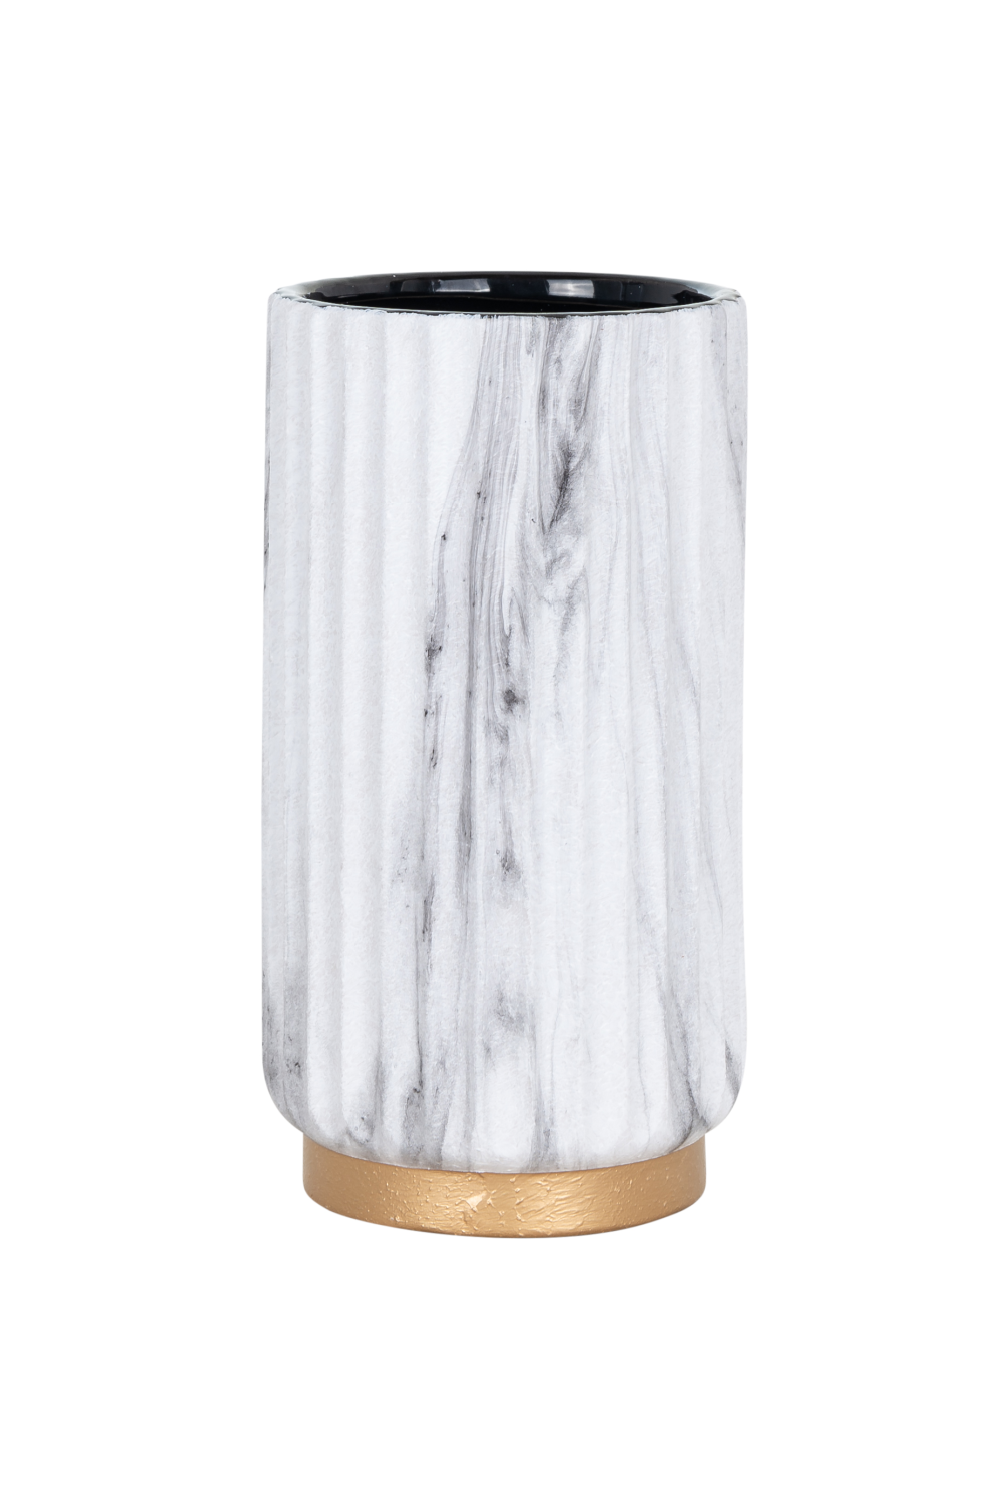 Corrugated White Ceramic Vase S | OROA Kenji | OROA.com